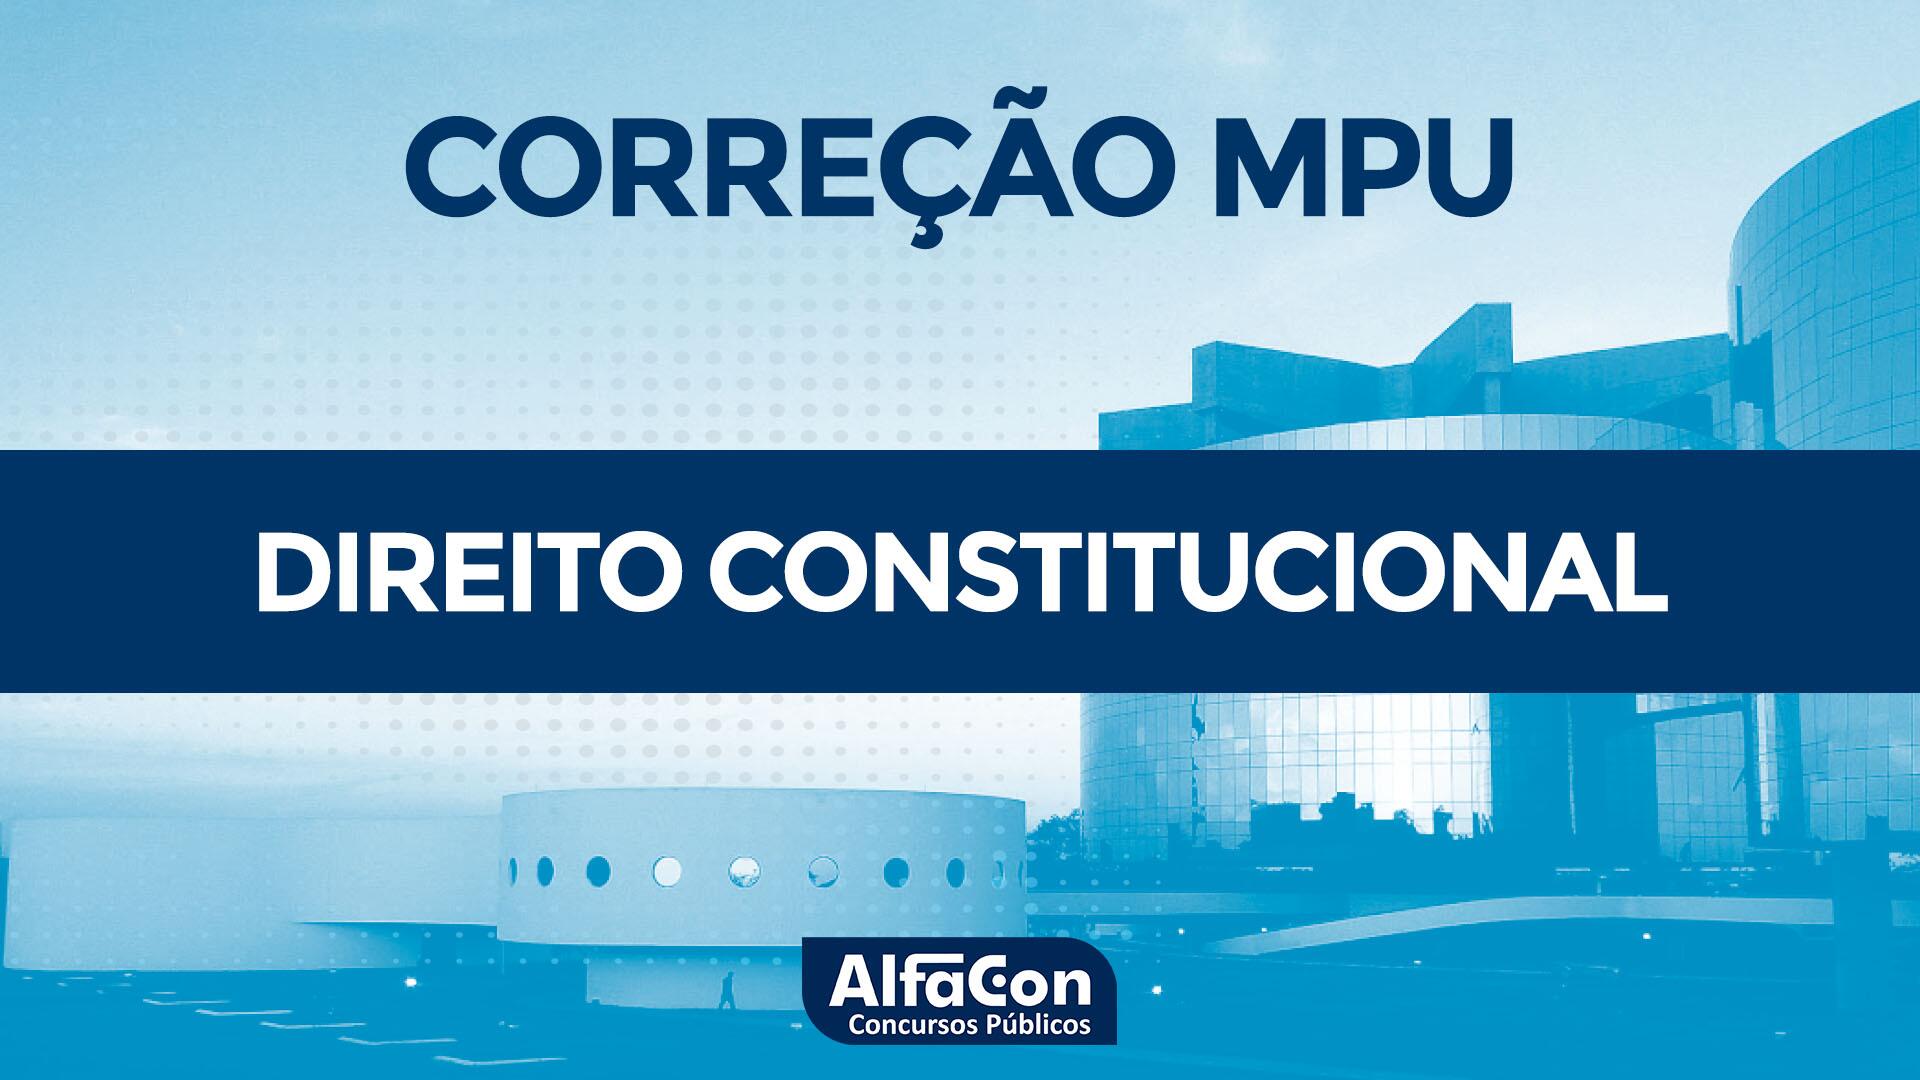 Gabarito Extraoficial MPU 2018 - Direito Constitucional